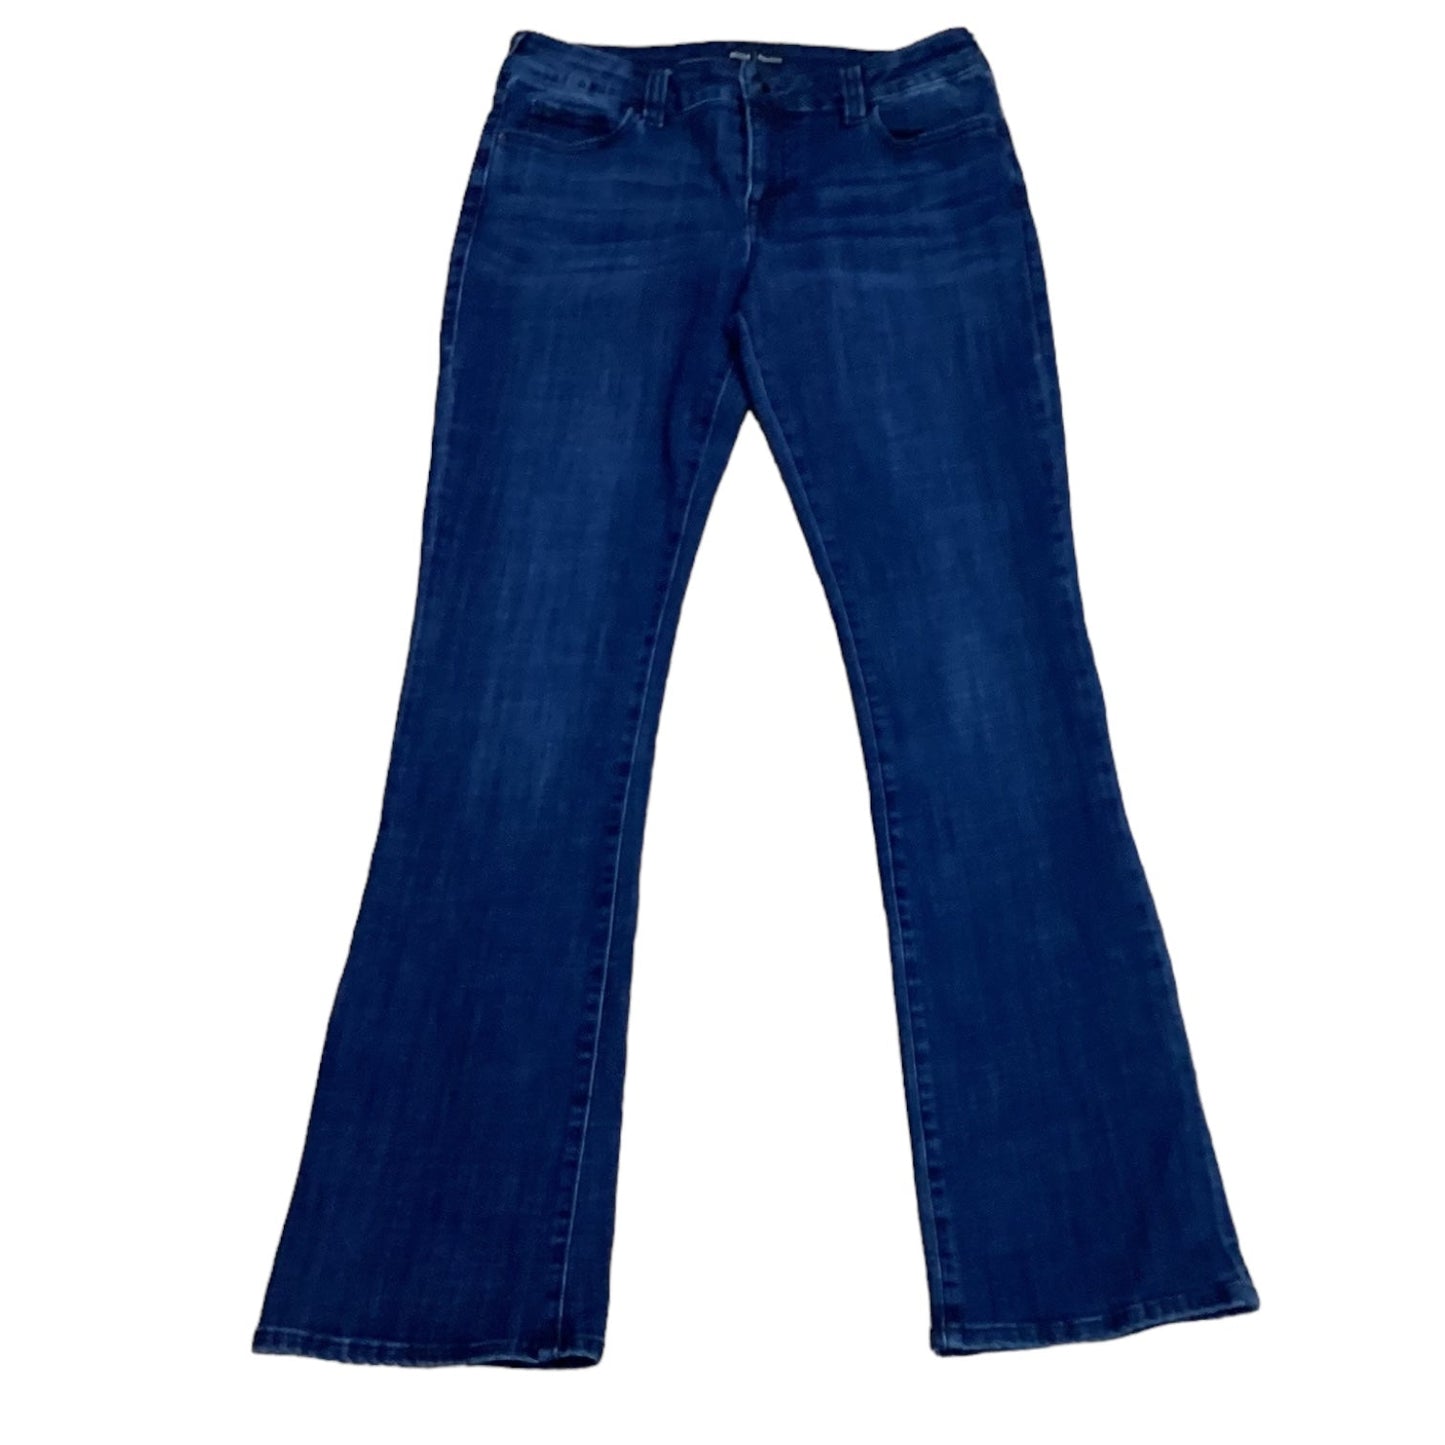 Blue Jeans Boot Cut Clothes Mentor, Size 8